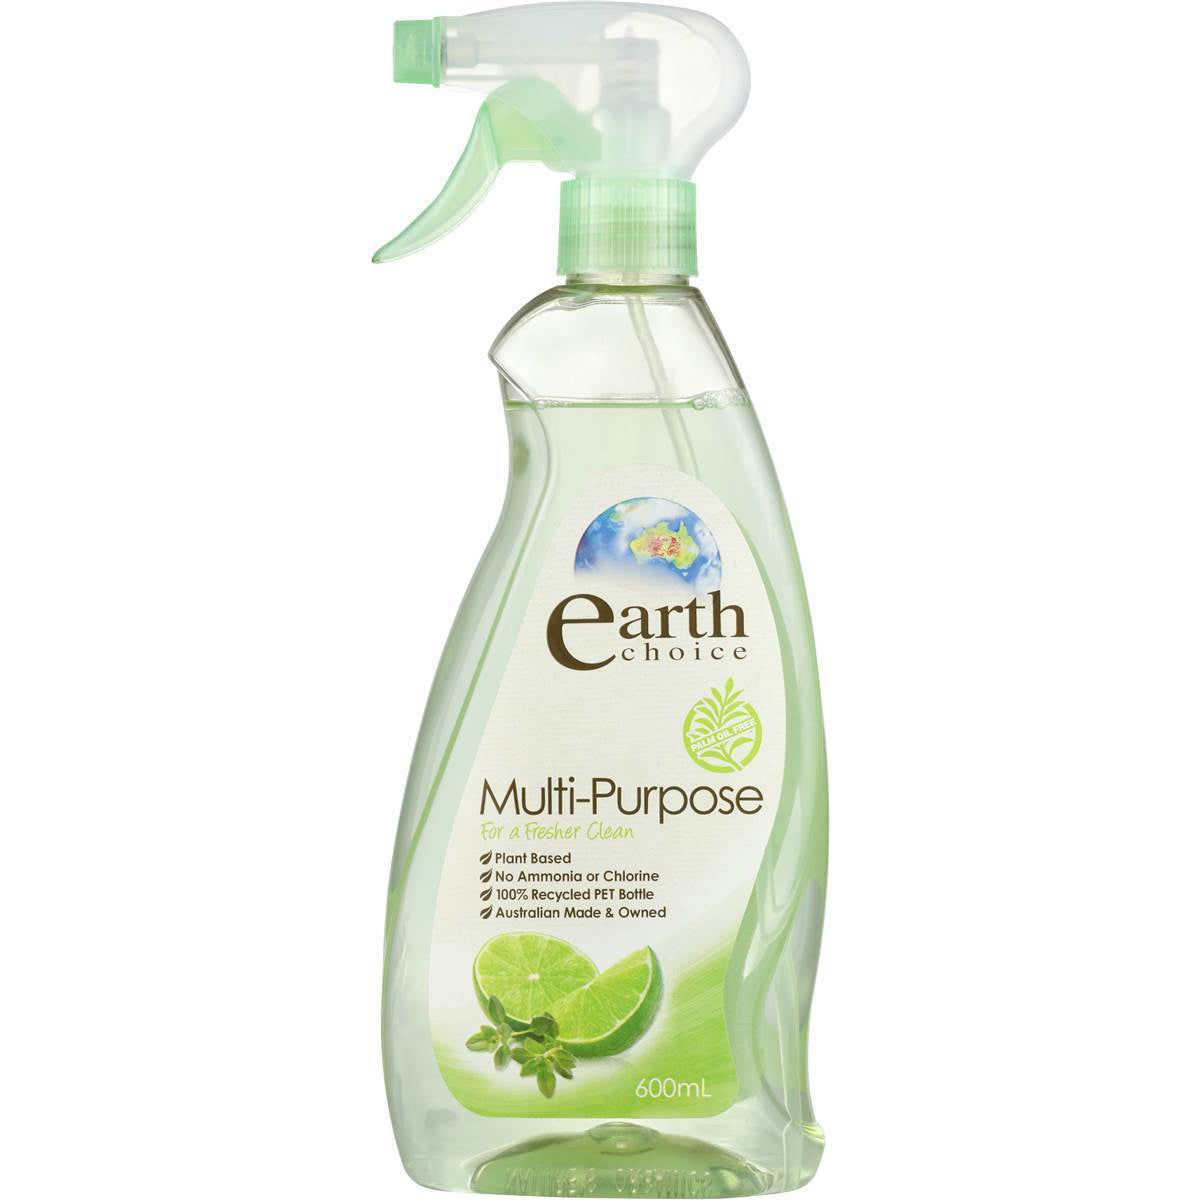 Earth Choice Multi Purpose Surface Spray 600mL